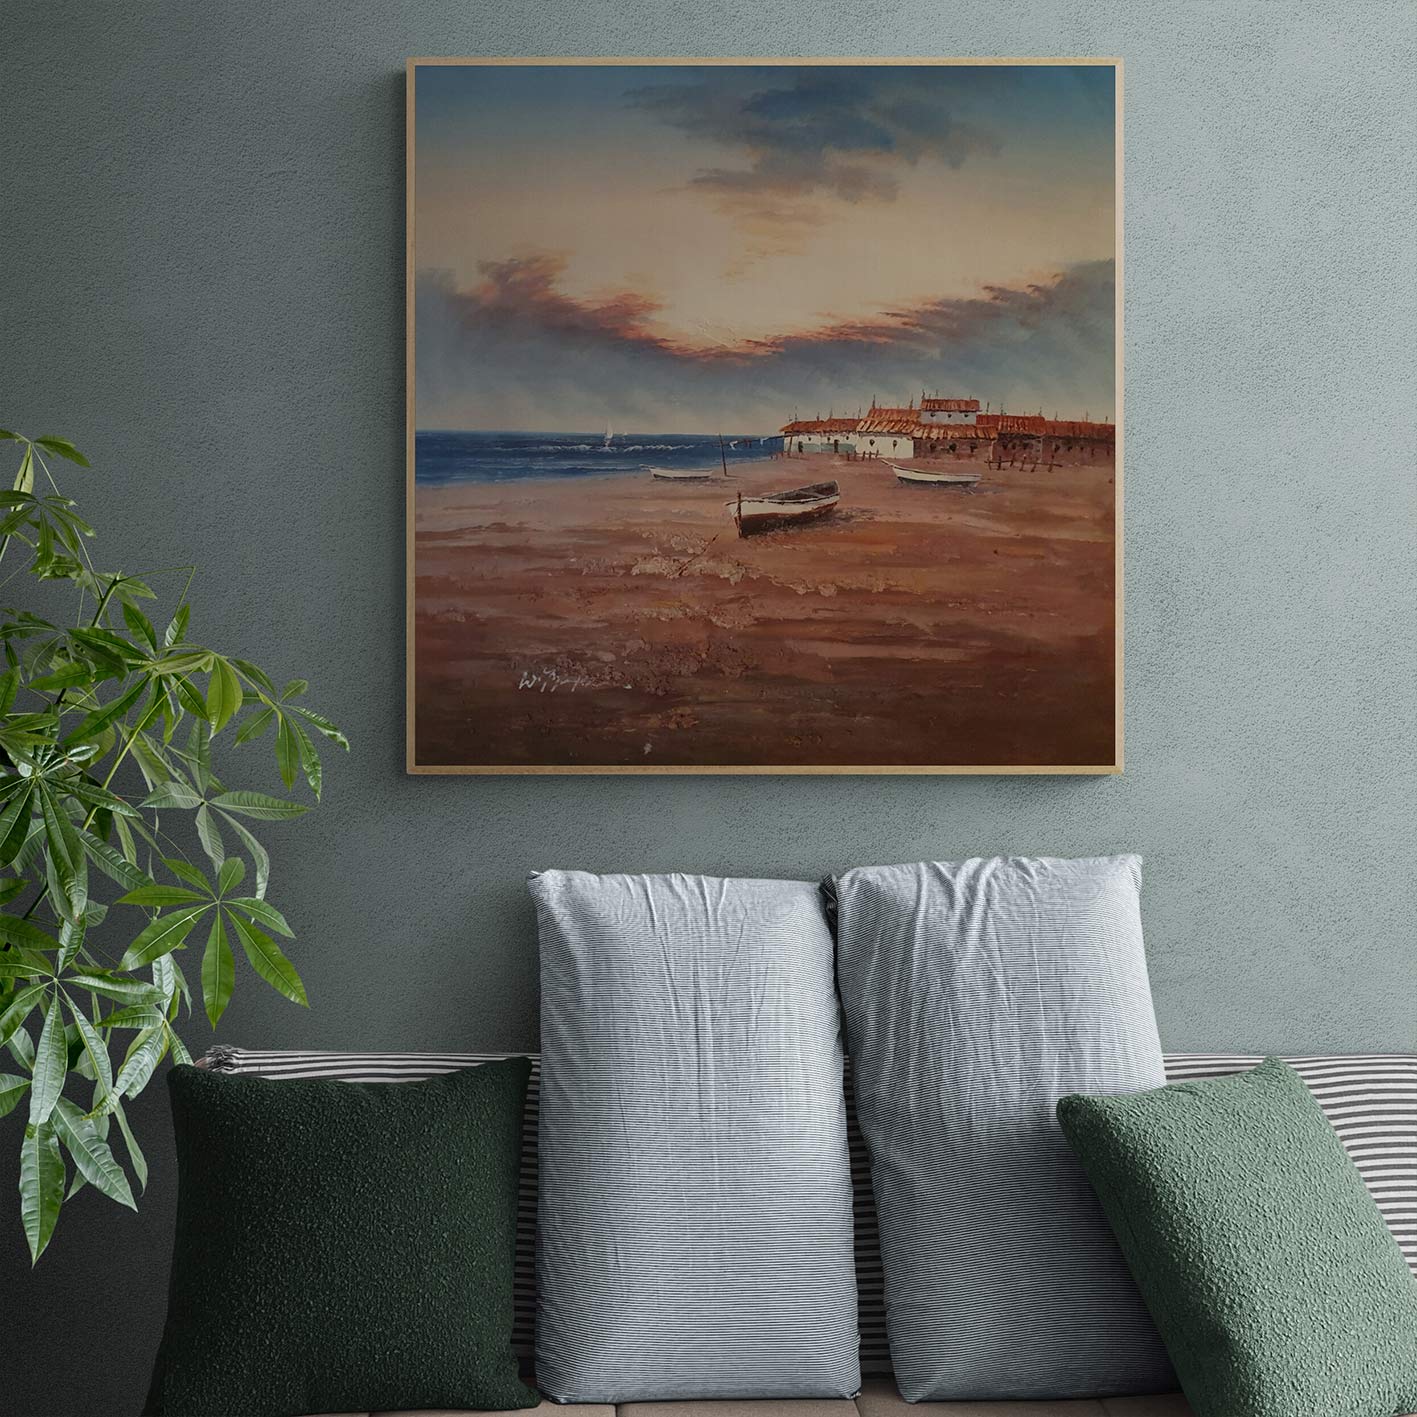 Beach Boat Painting I 80x80 cm